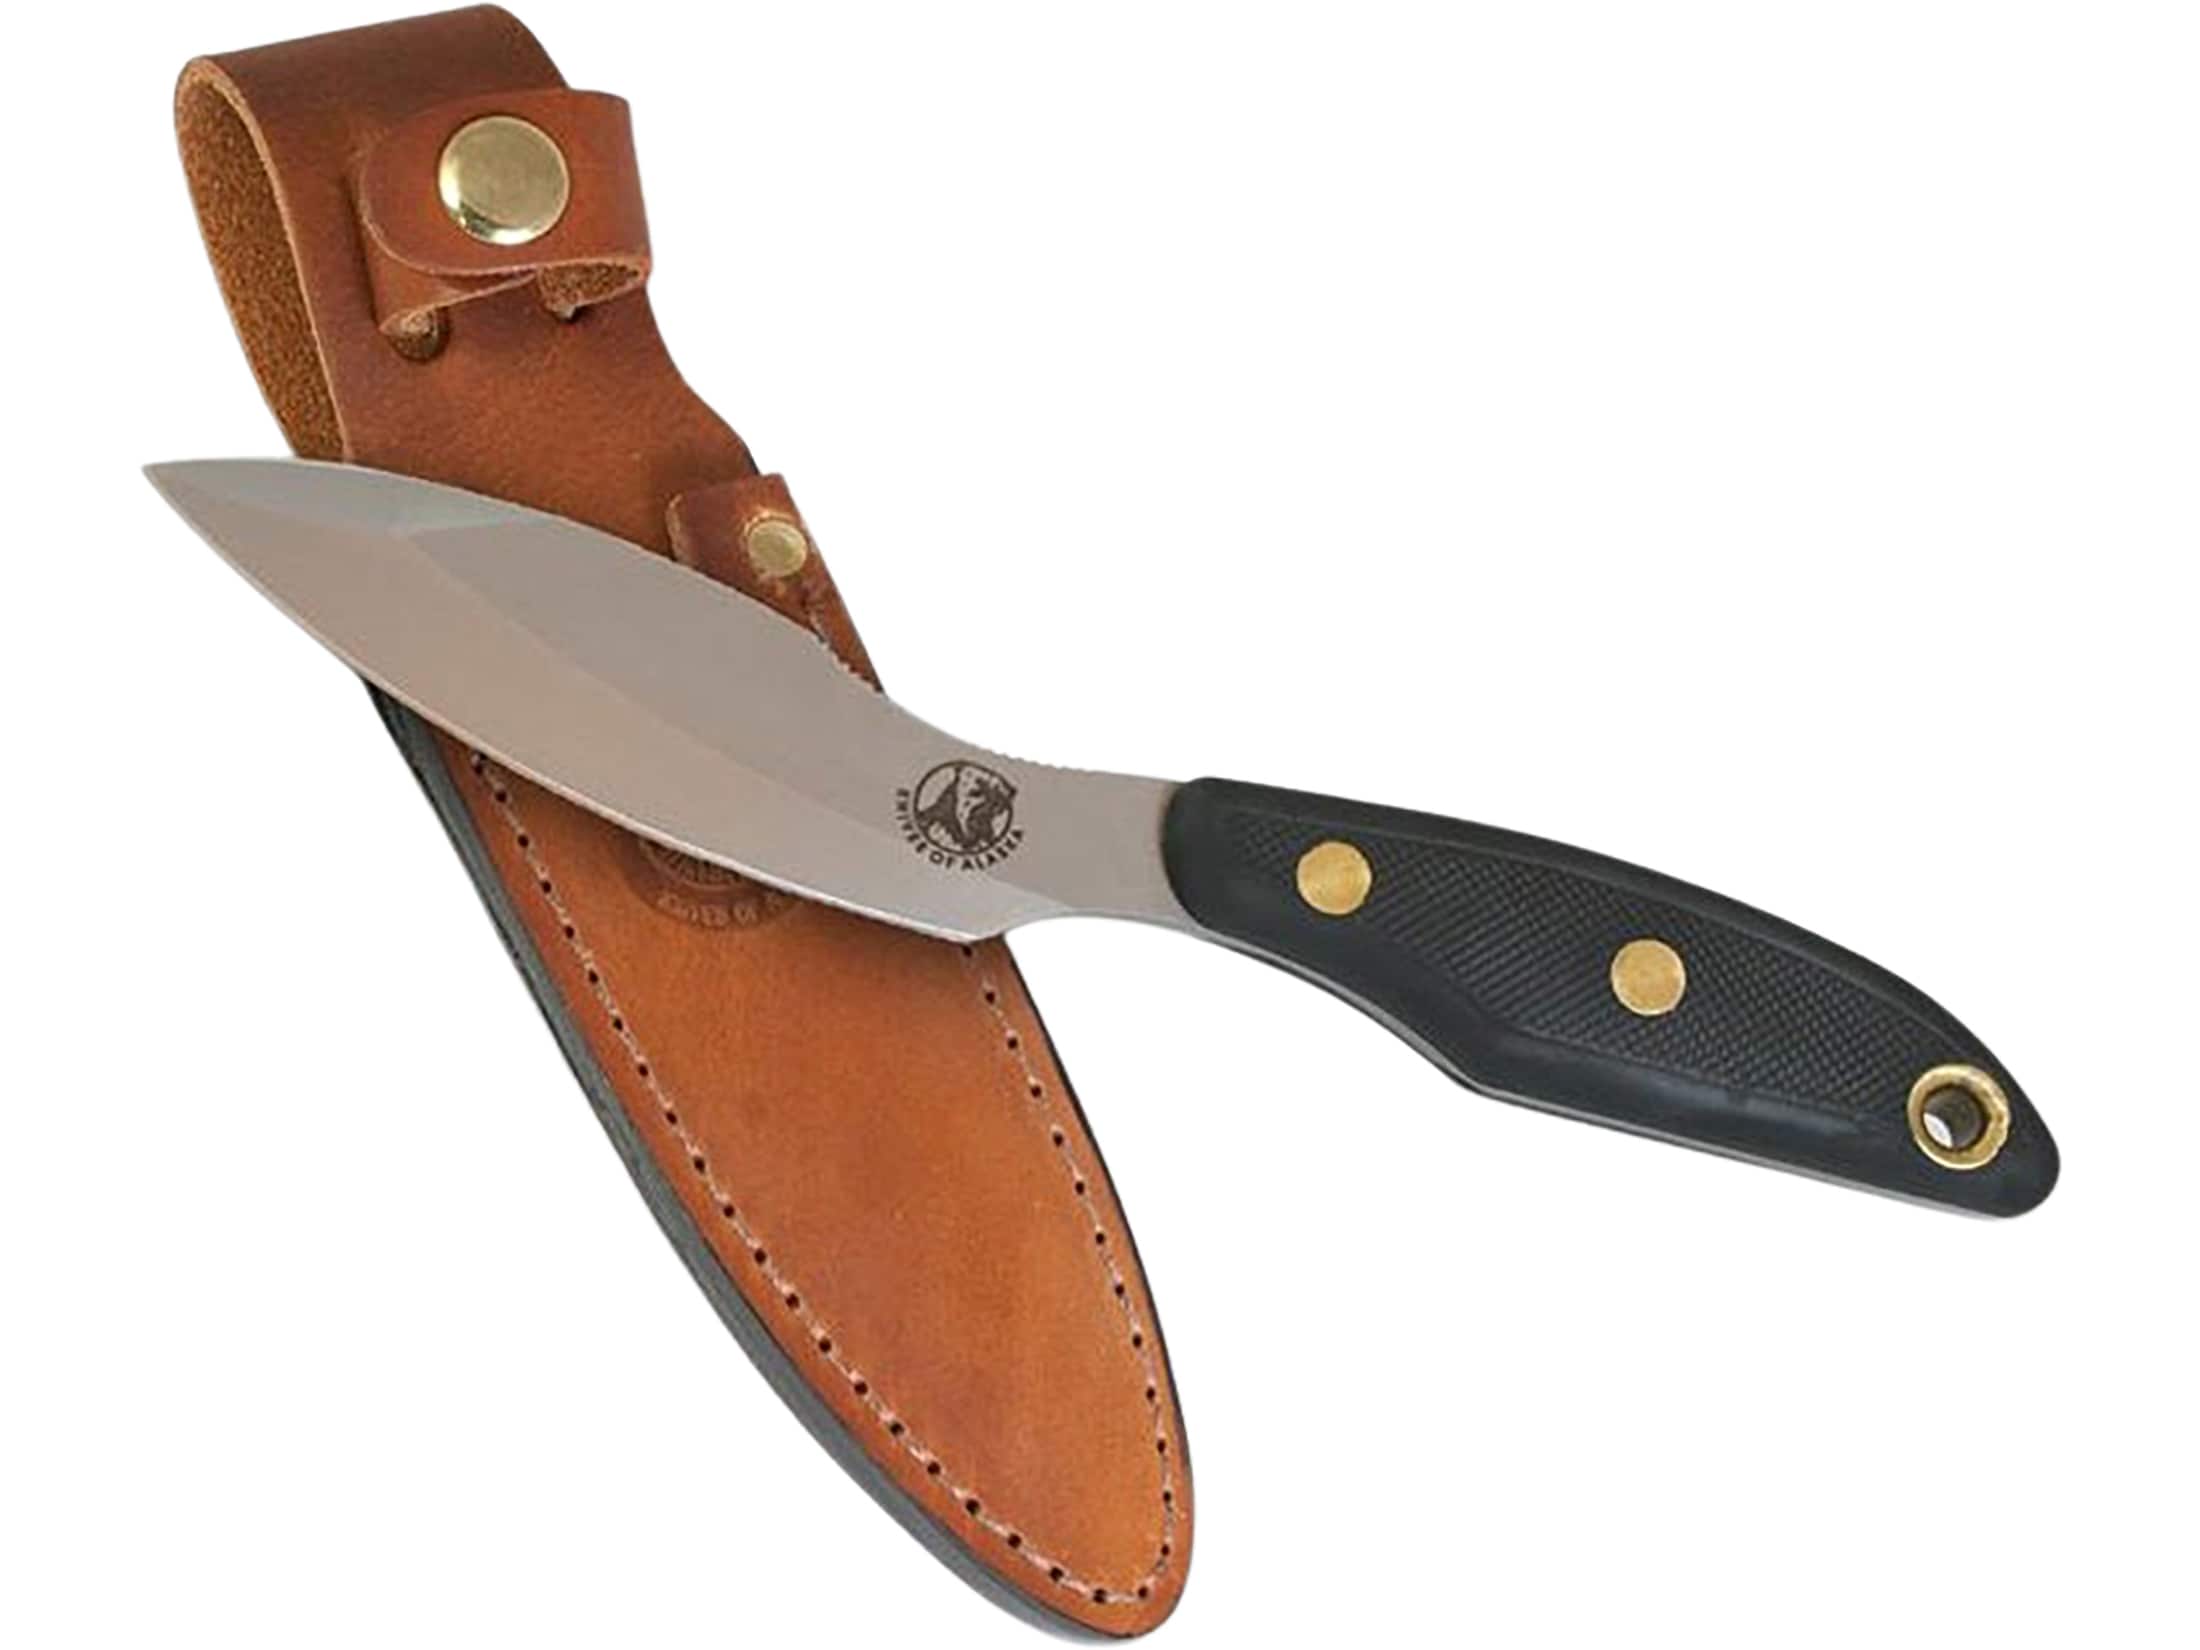 Crow Calls Knife Blade Sale - Save 20% on Popular Select Knife Blades